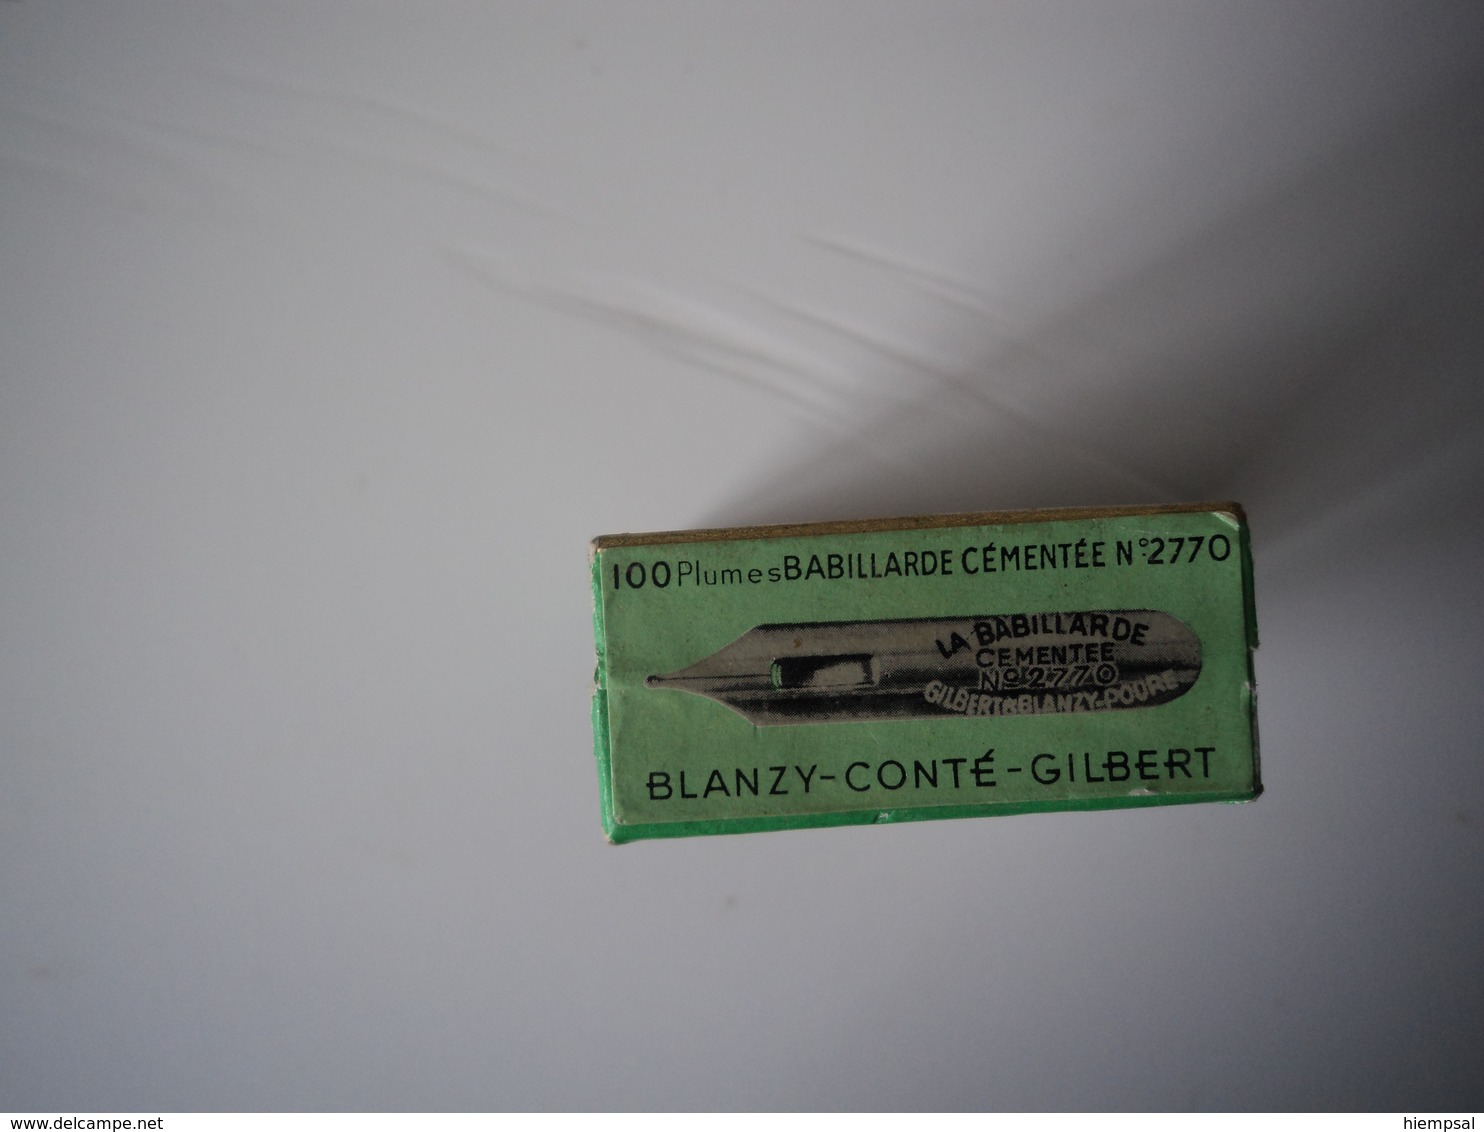 Boite Neuf  De 100 Plumes   Babillarde  Cementee   N° 2770  Blazy- Conté- Gilbert   Plomble - Plumes